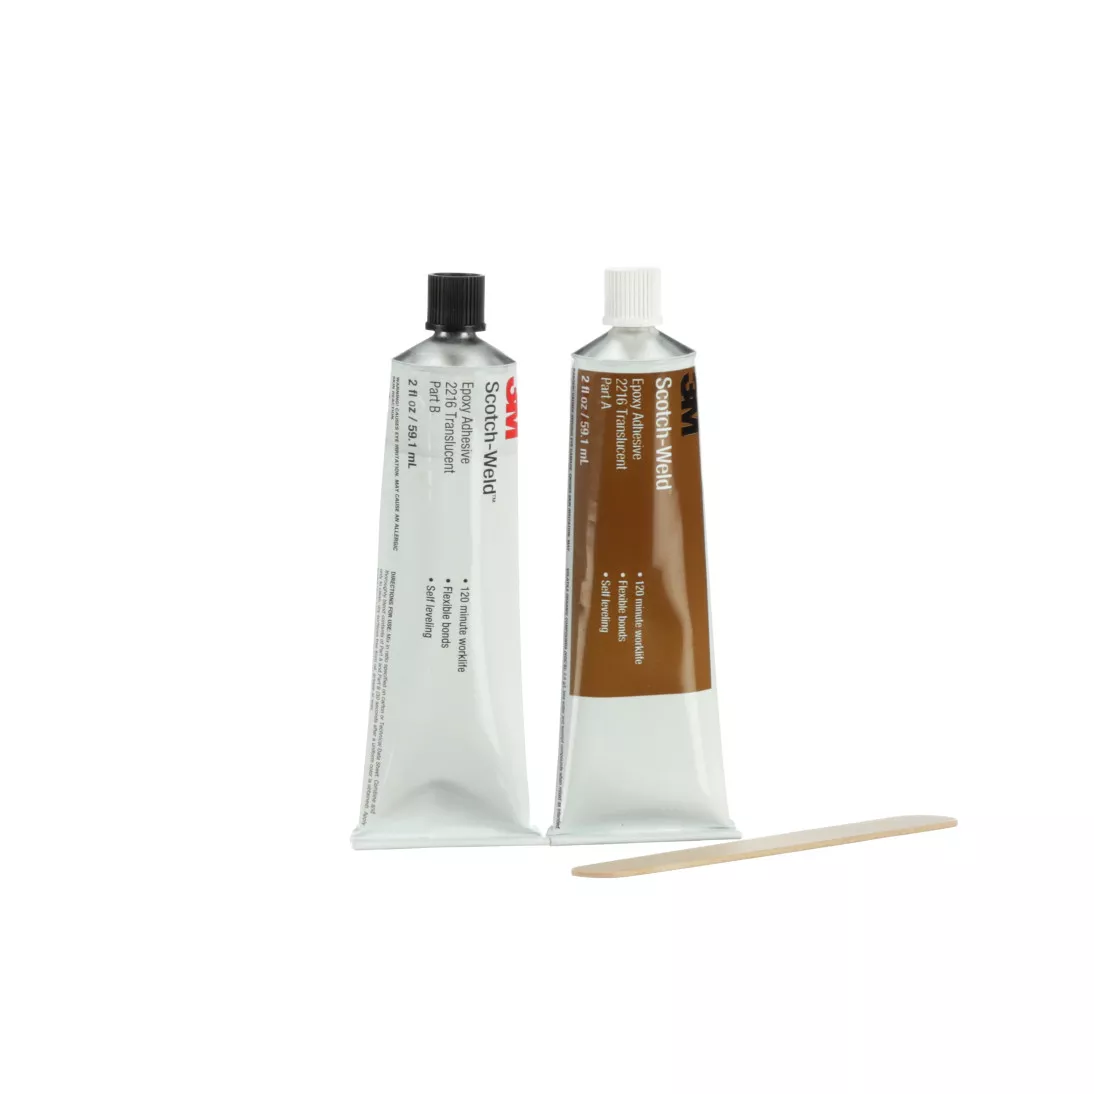 3M™ Scotch-Weld™ Epoxy Adhesive 2216, Translucent, Part B/A, 2 fl oz
Tube Kit, 6/Case